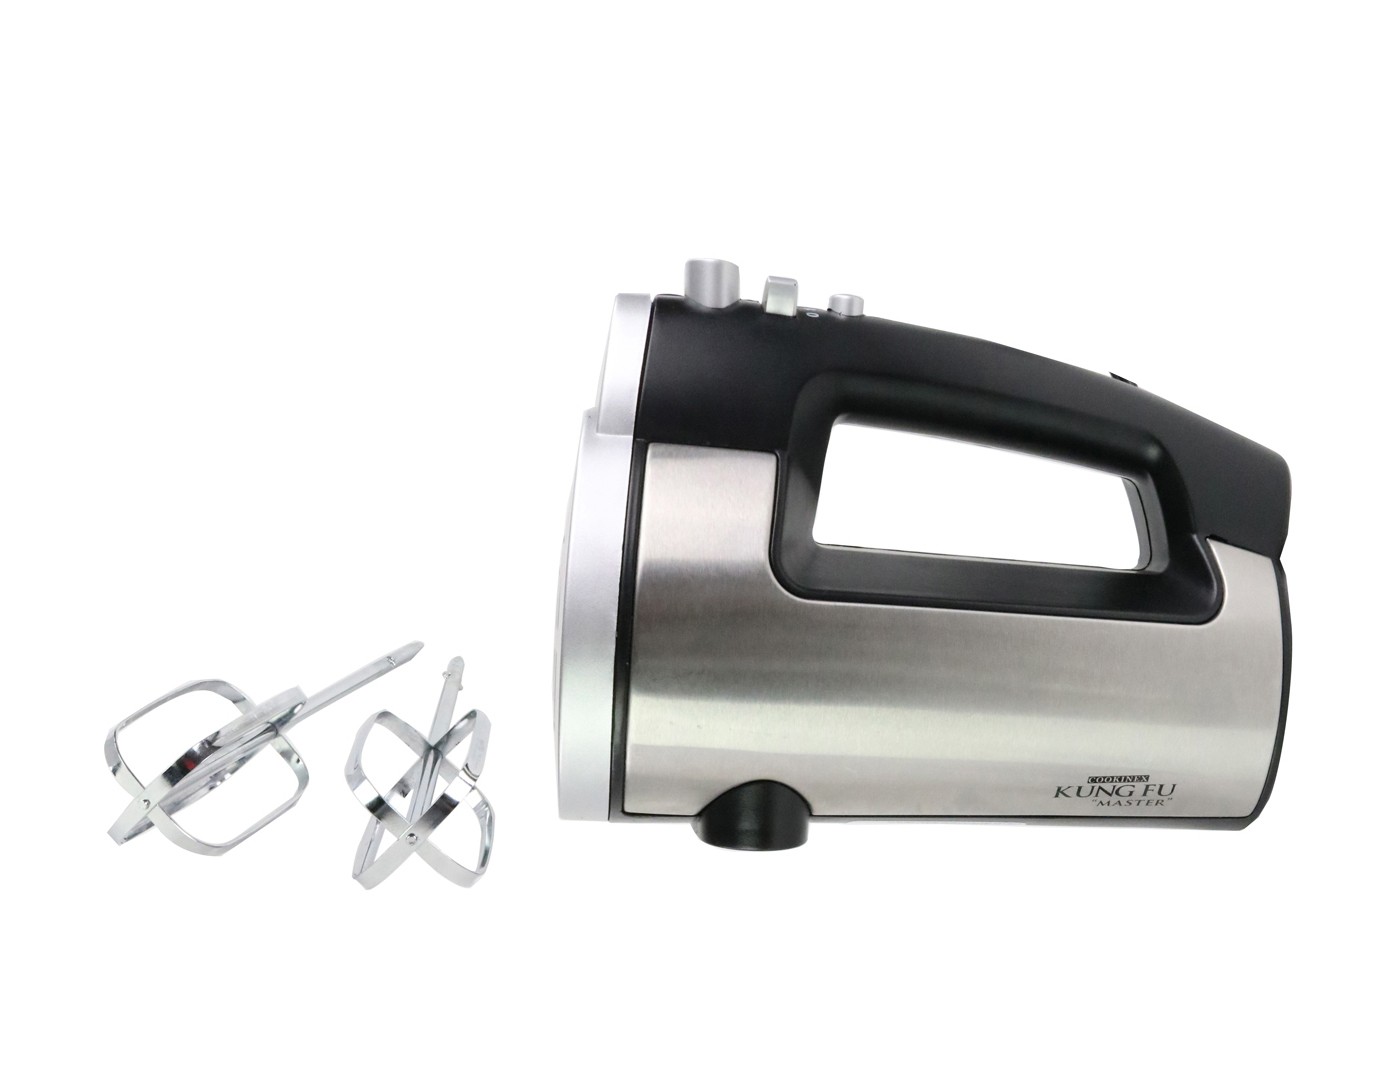 Hand Mixer Electric,Kestreln 5-Speed Mixer Electric Handheld,350W